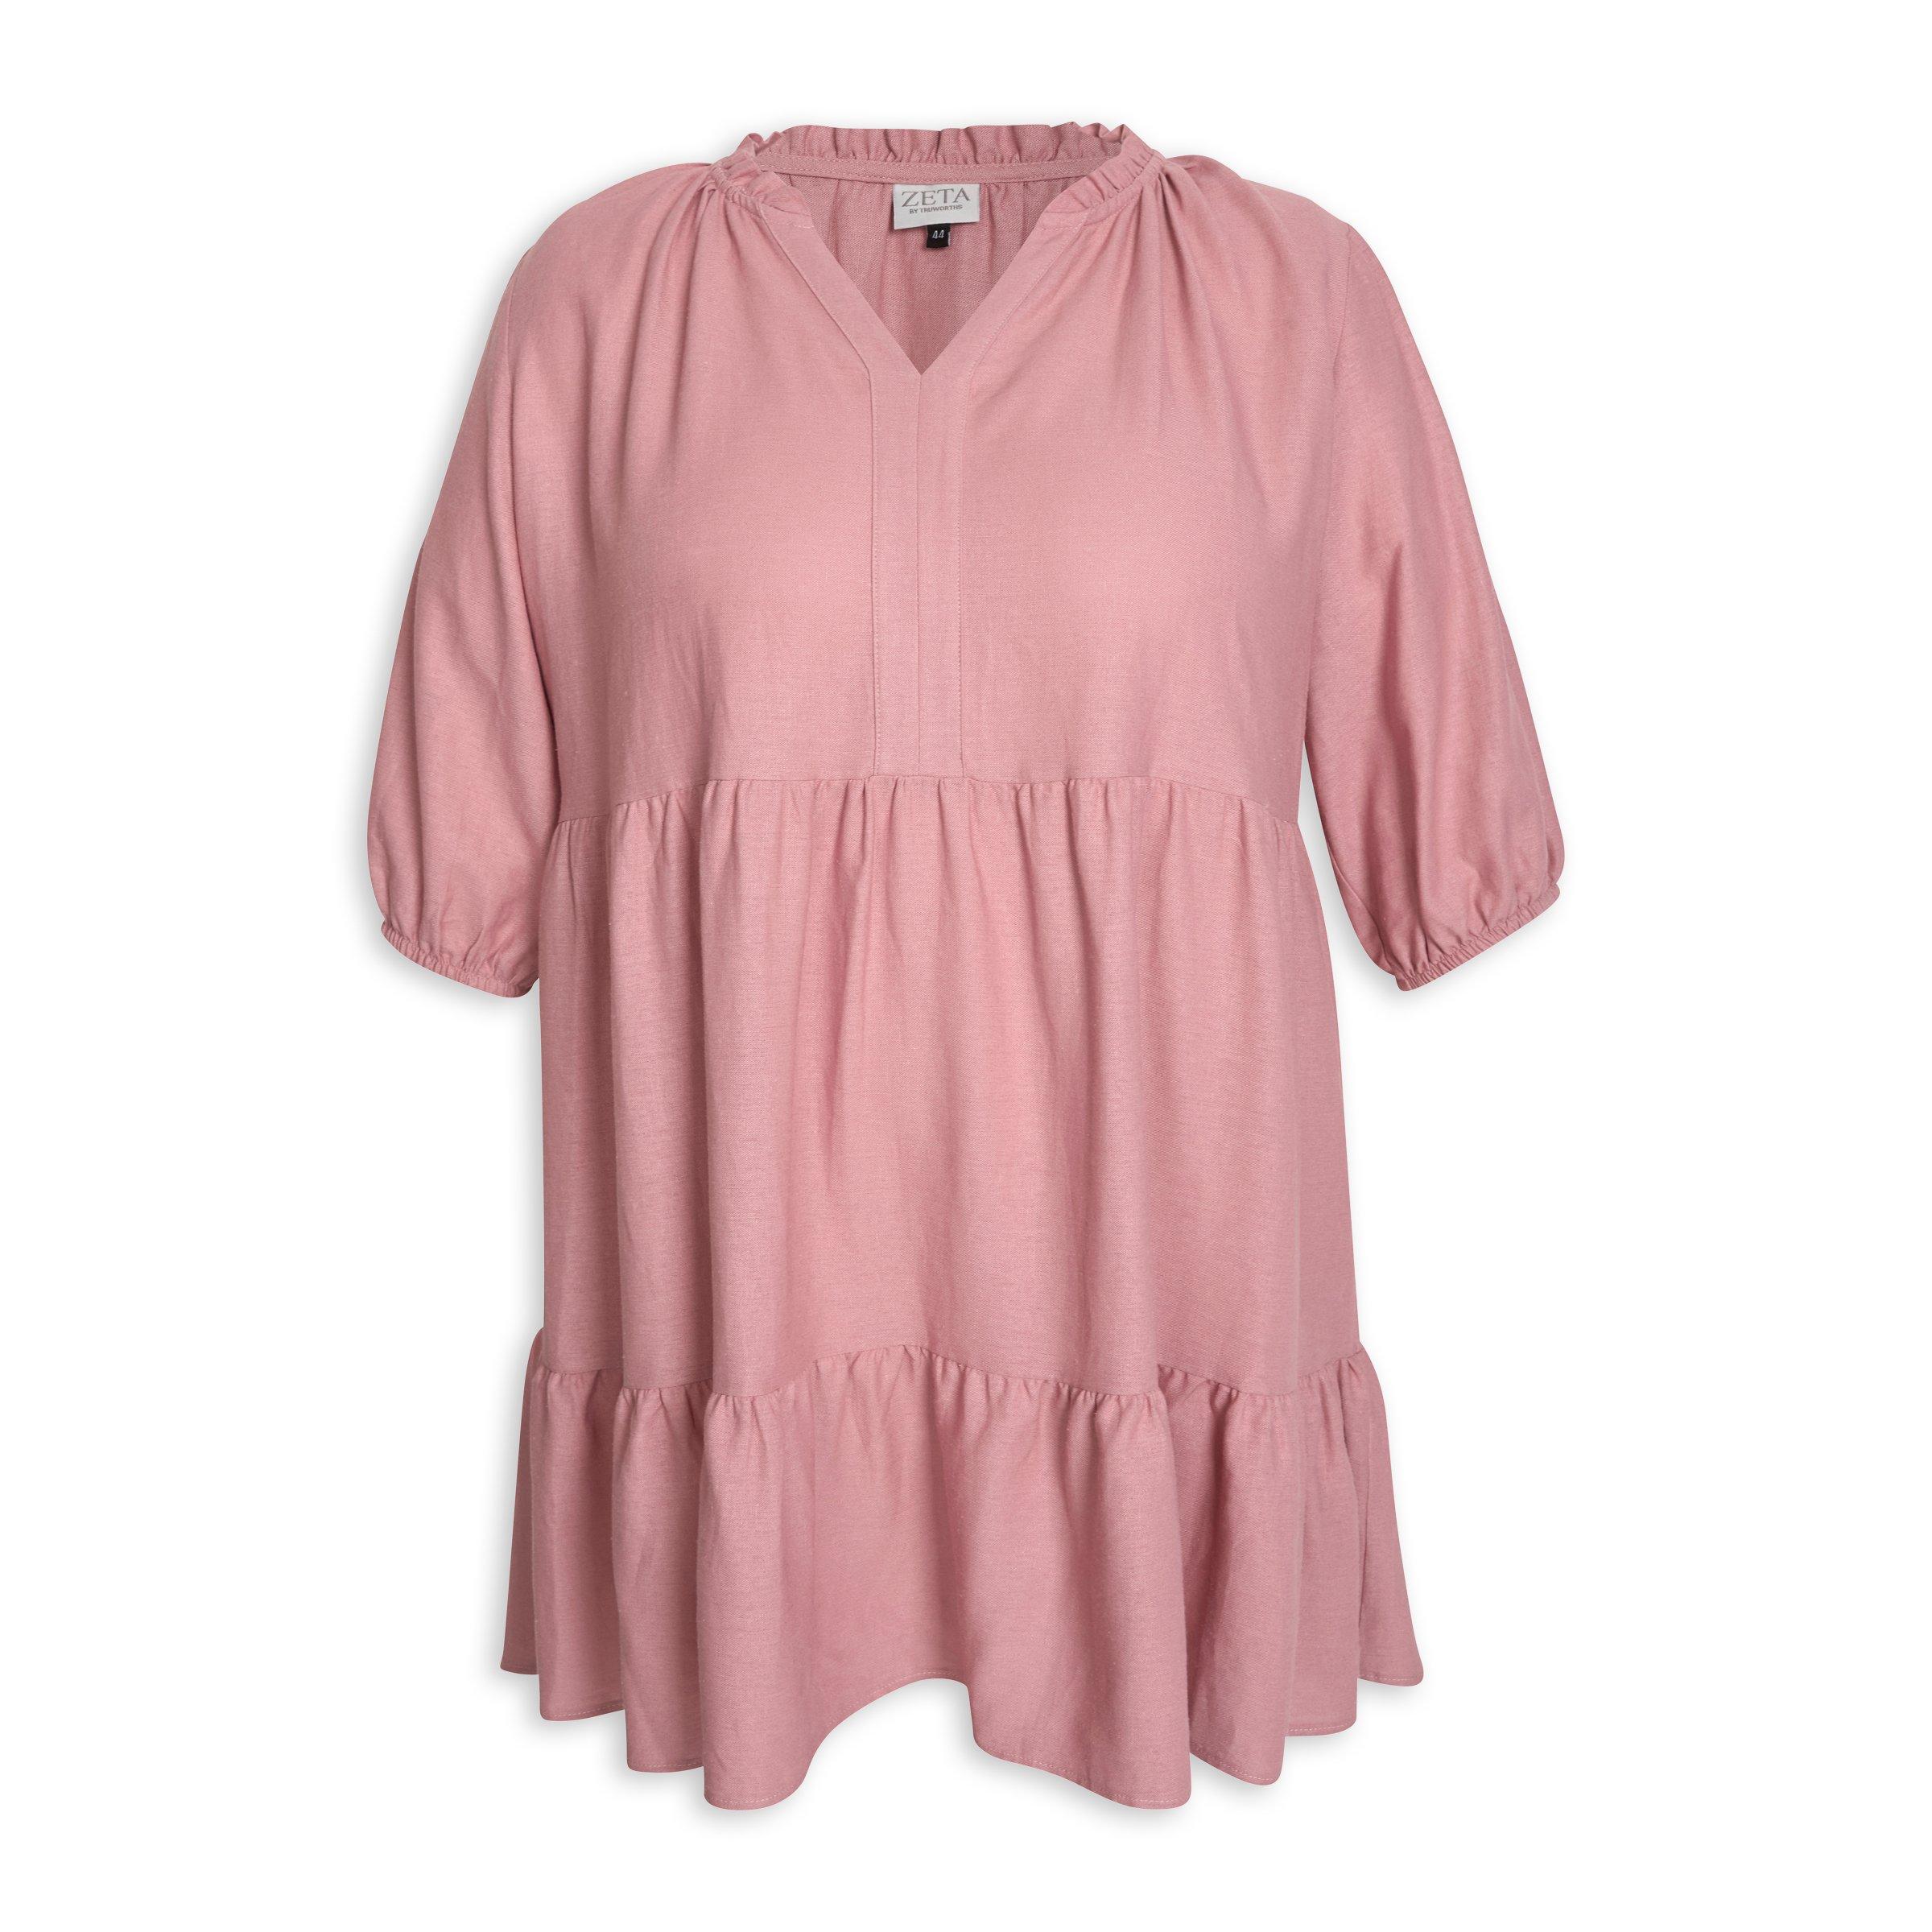 Buy Zeta Pink Tiered Dress Online | Truworths